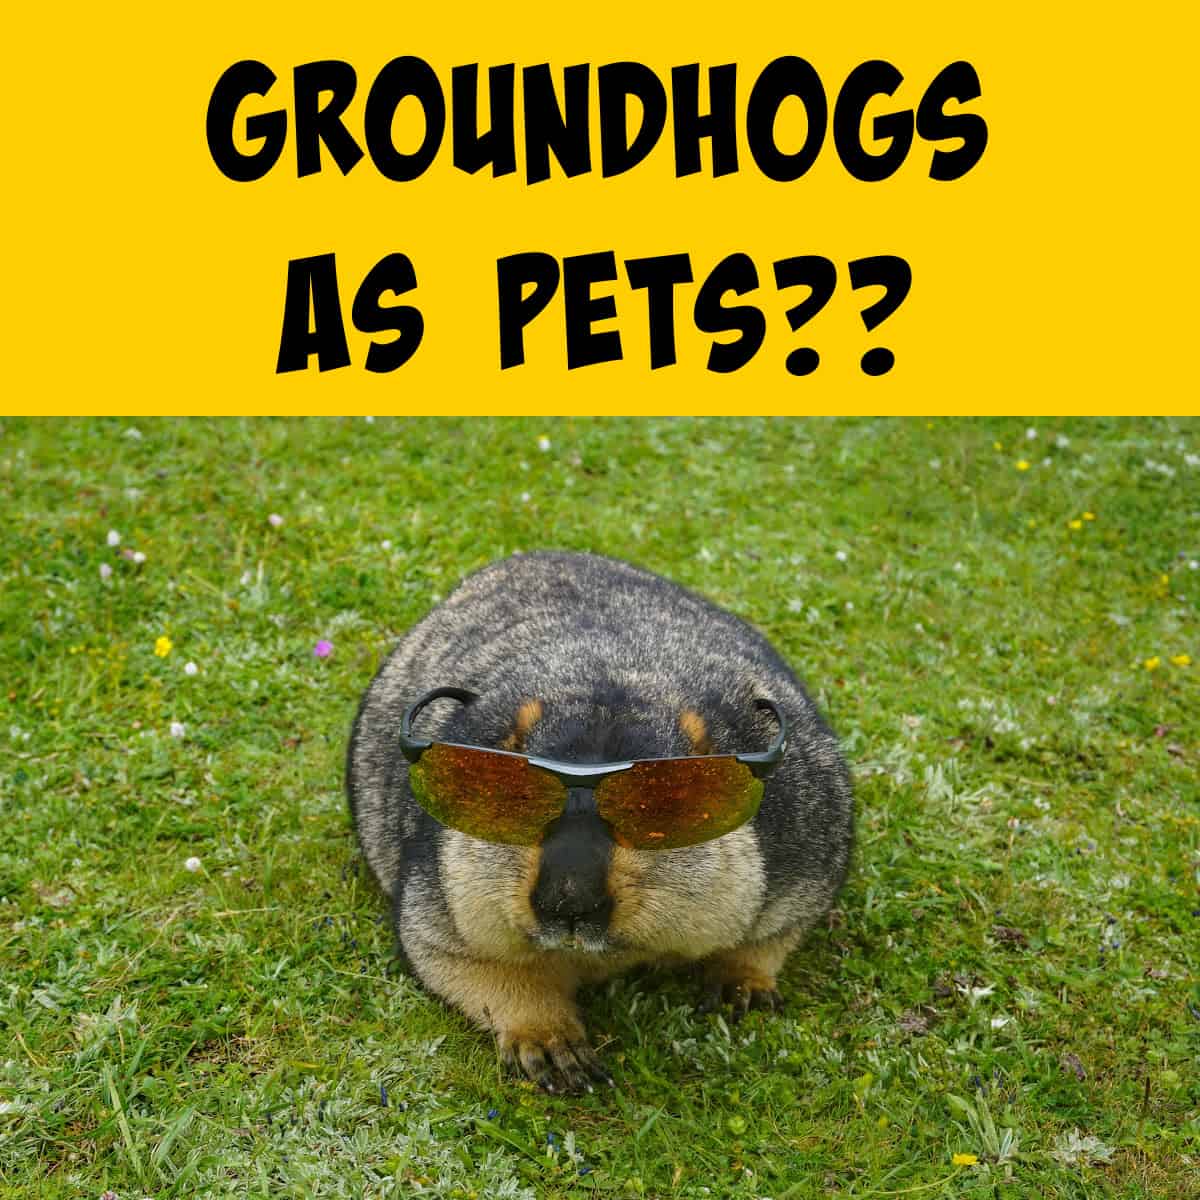 Pet Groundhog